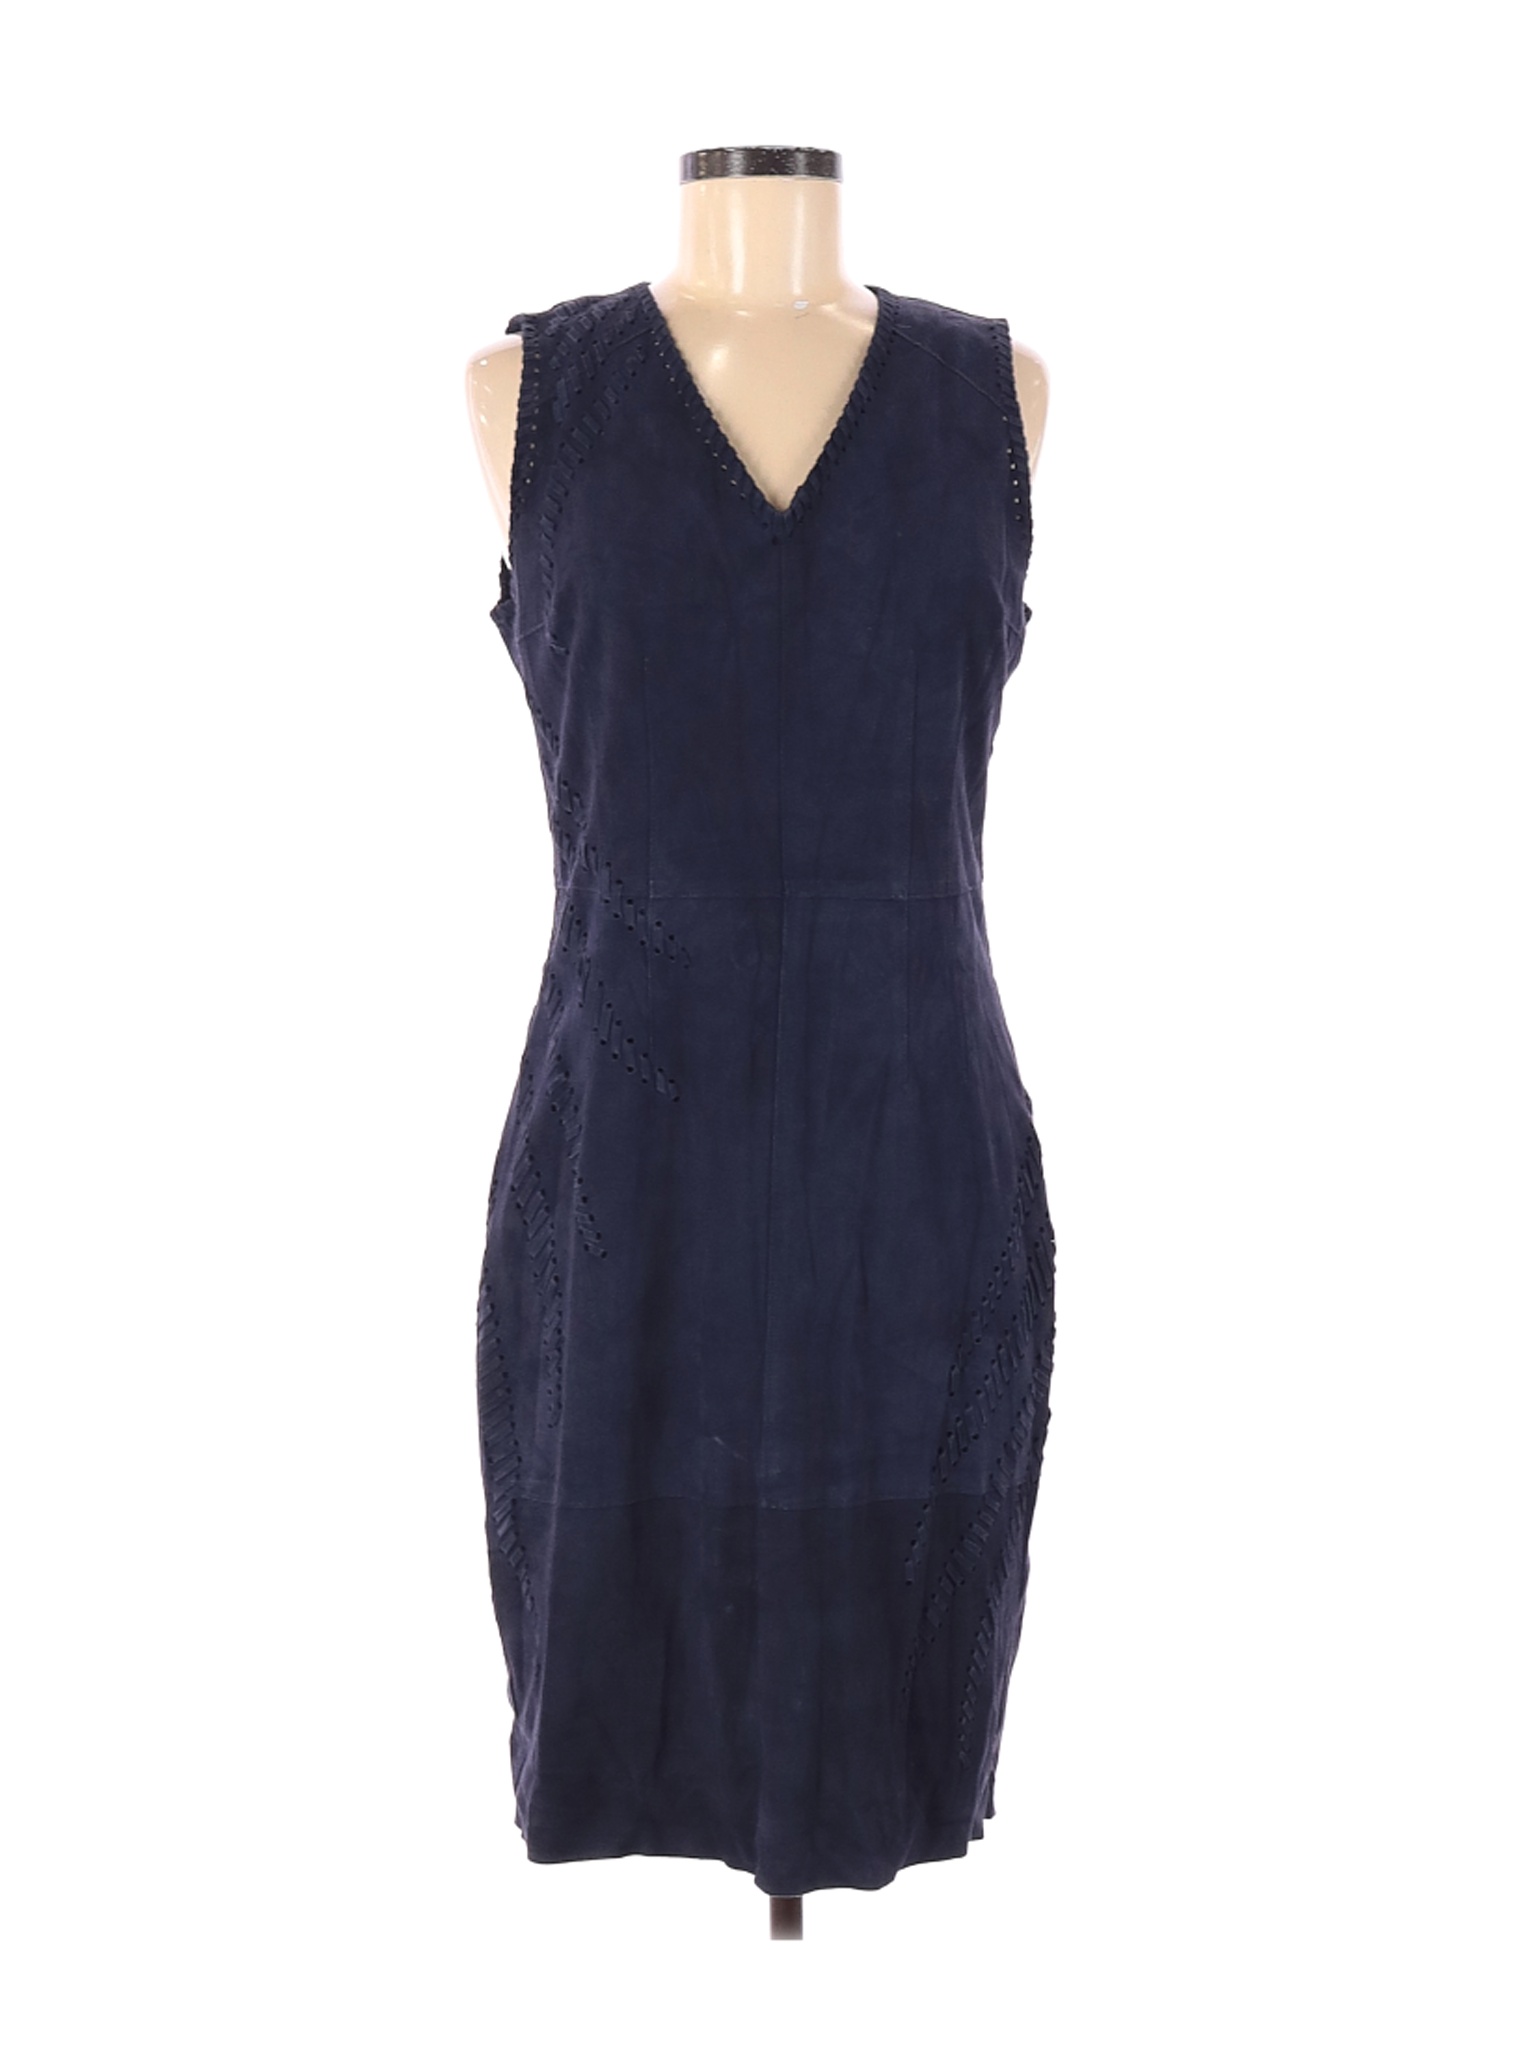 Elie Tahari Women Blue Casual Dress 8 | eBay